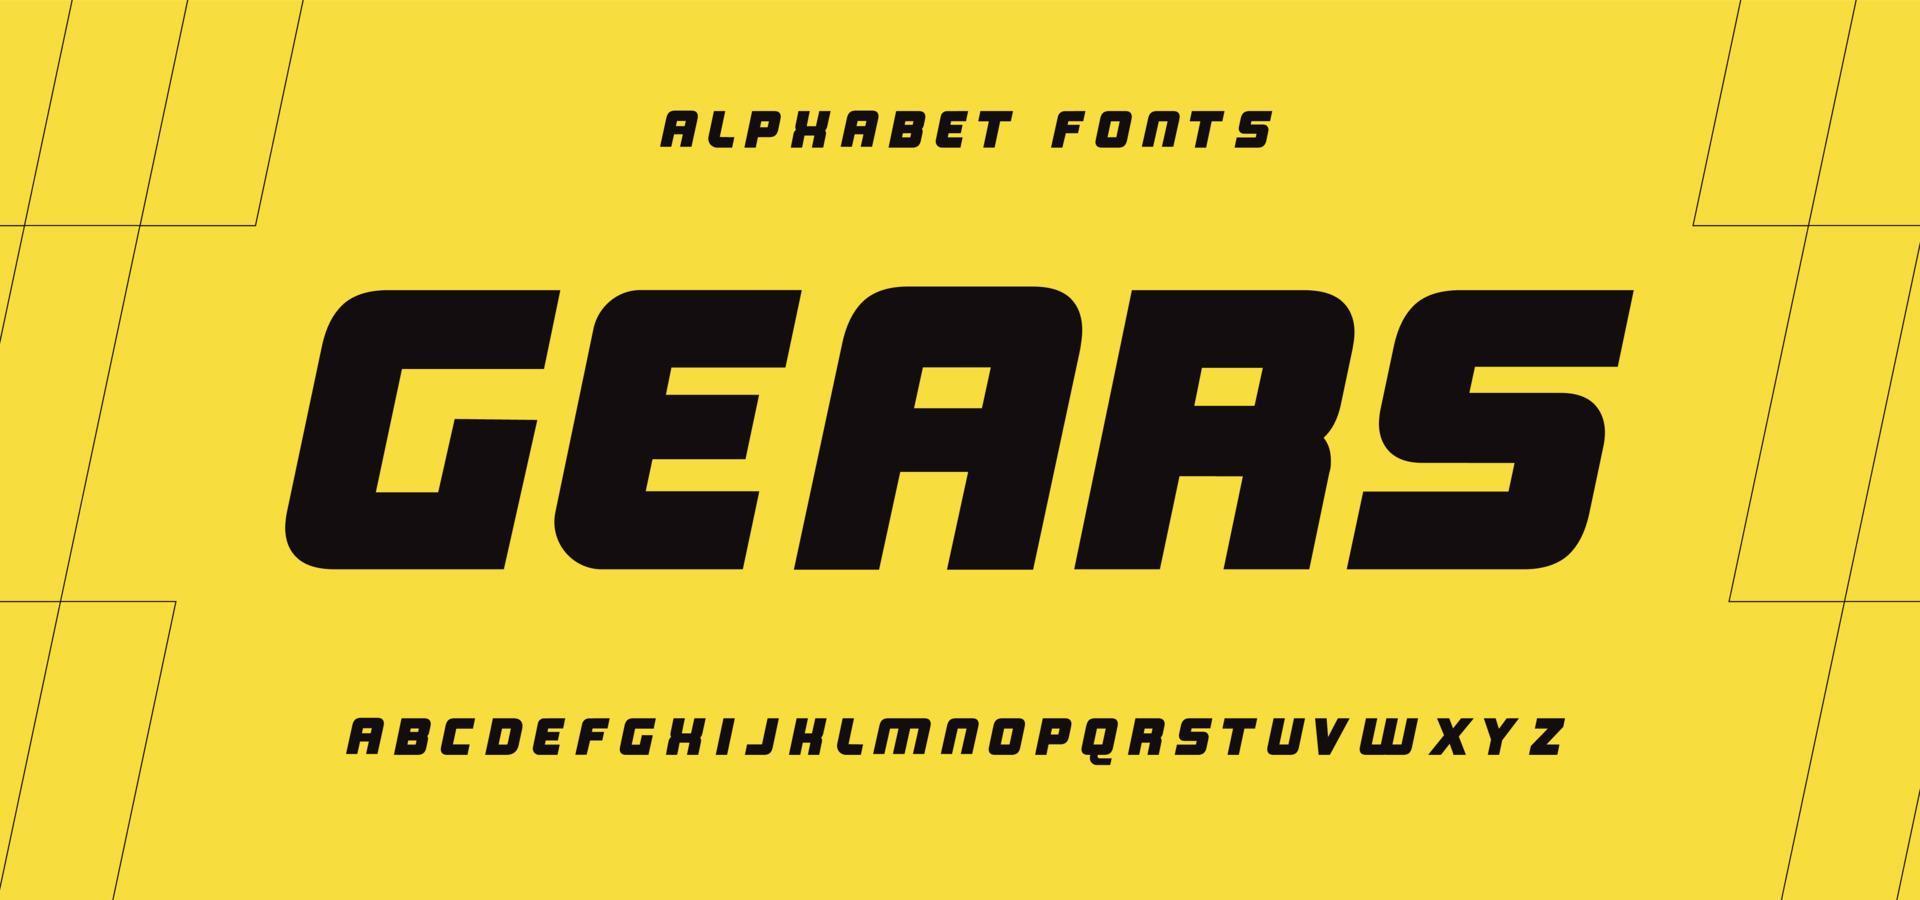 Industrial alphabet font. Modern sans serif typography vector